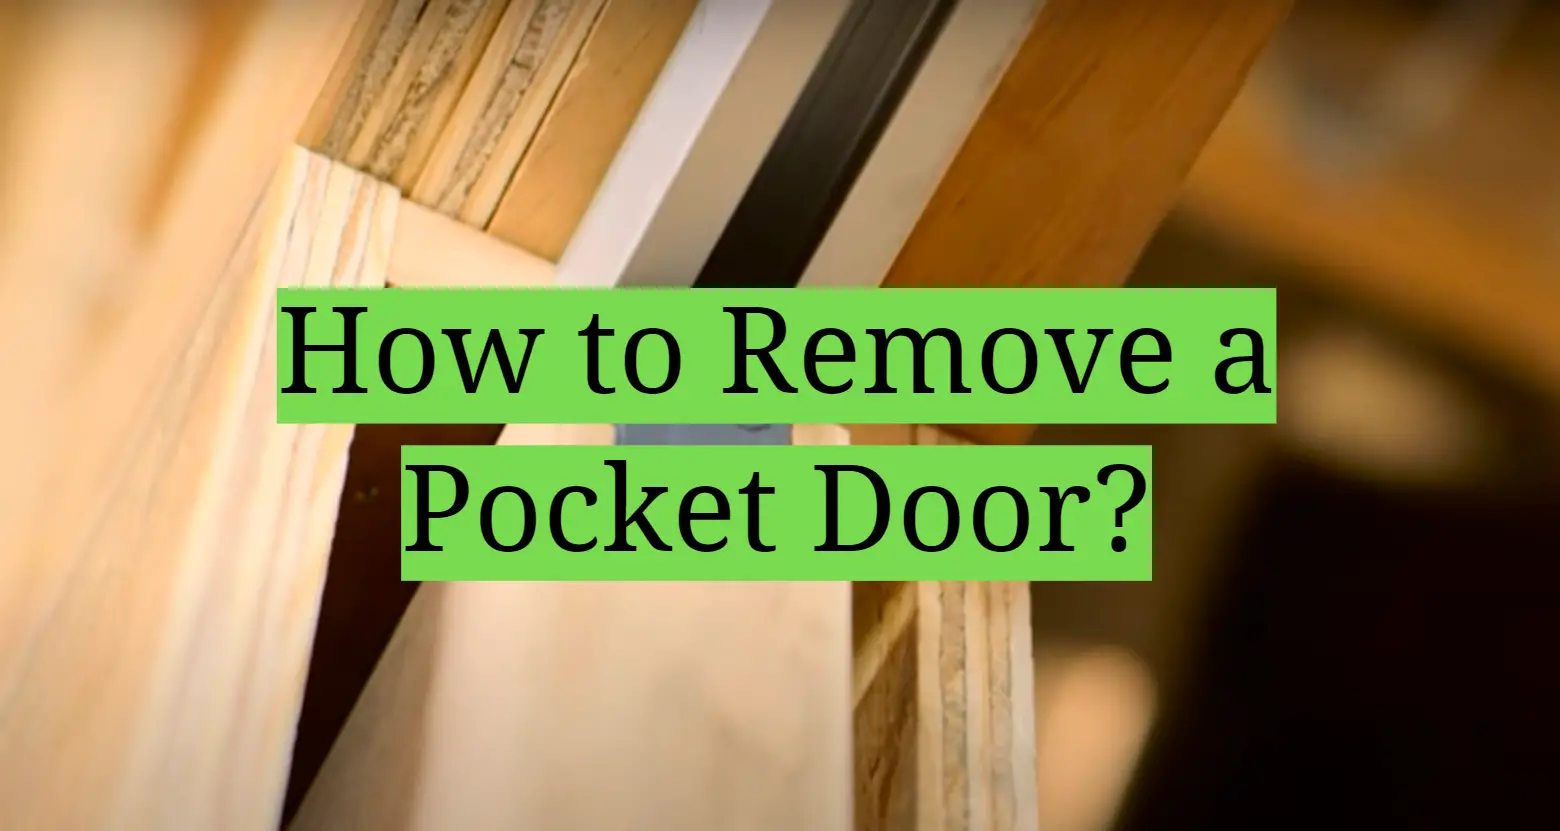 How to Remove a Pocket Door?